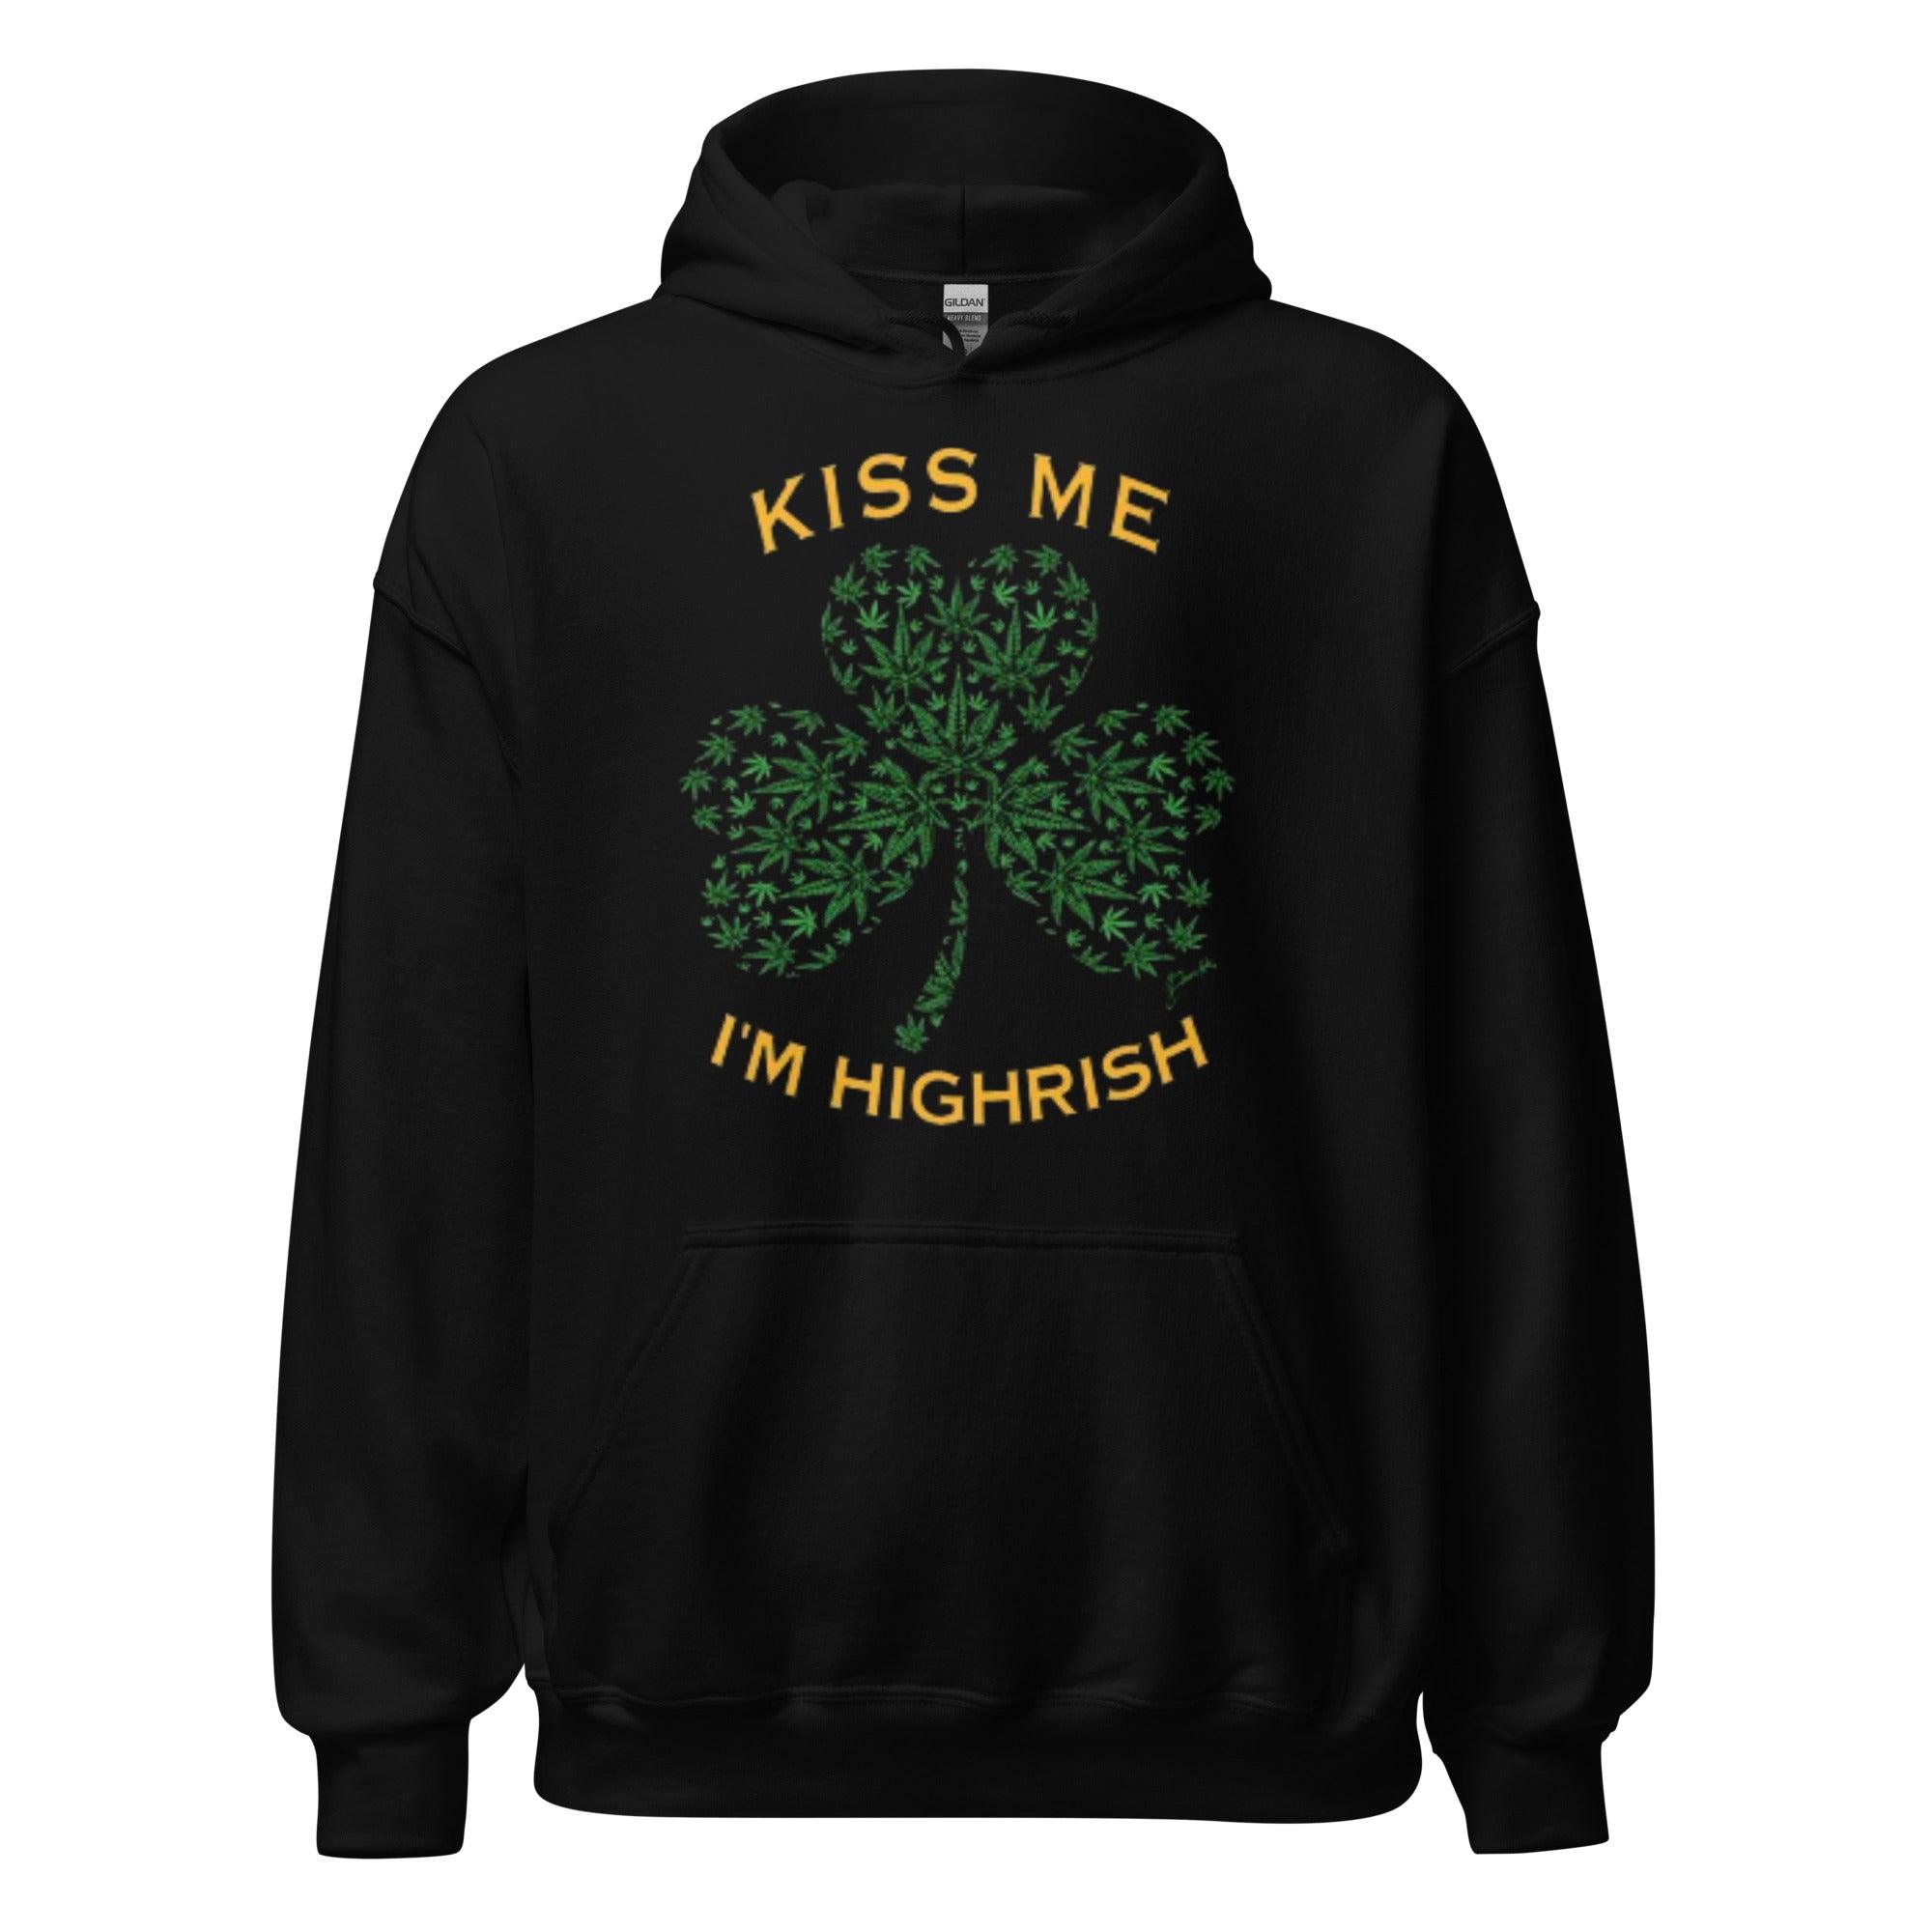 St. Patrick's Day Hoodie Kiss Me I'm Highrish Heavyweight Blended Cotton Unisex Hoodie - TopKoalaTee